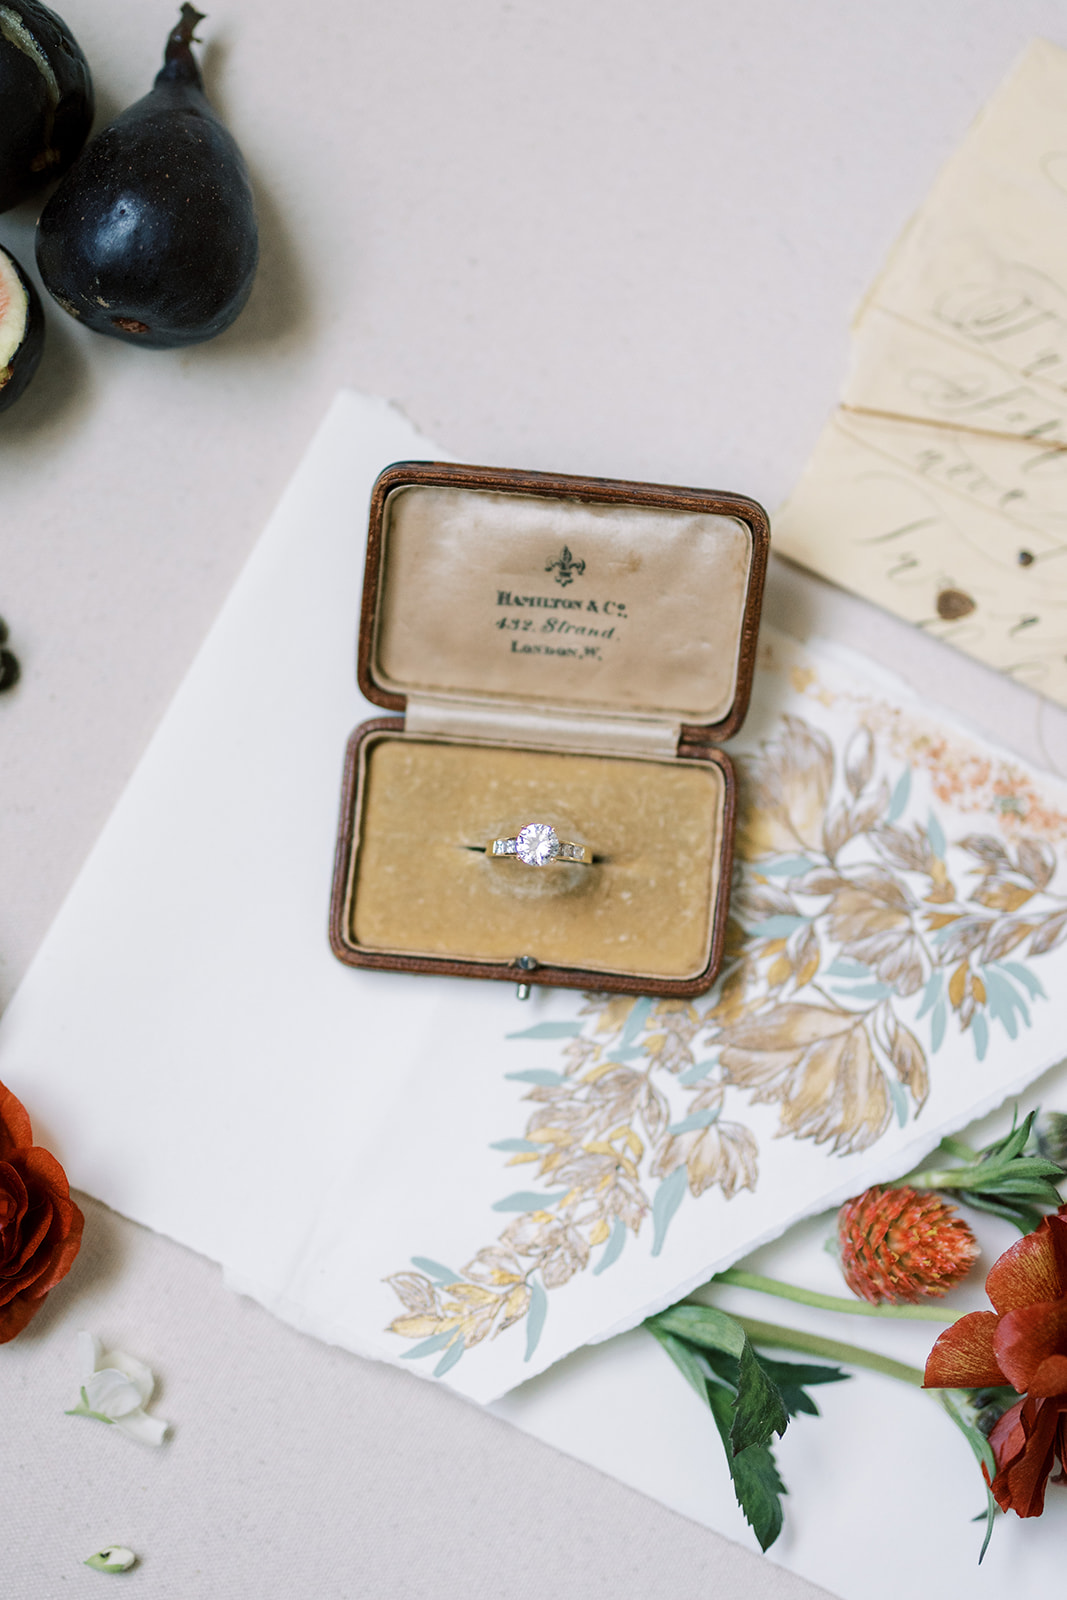 Wedding ring and box